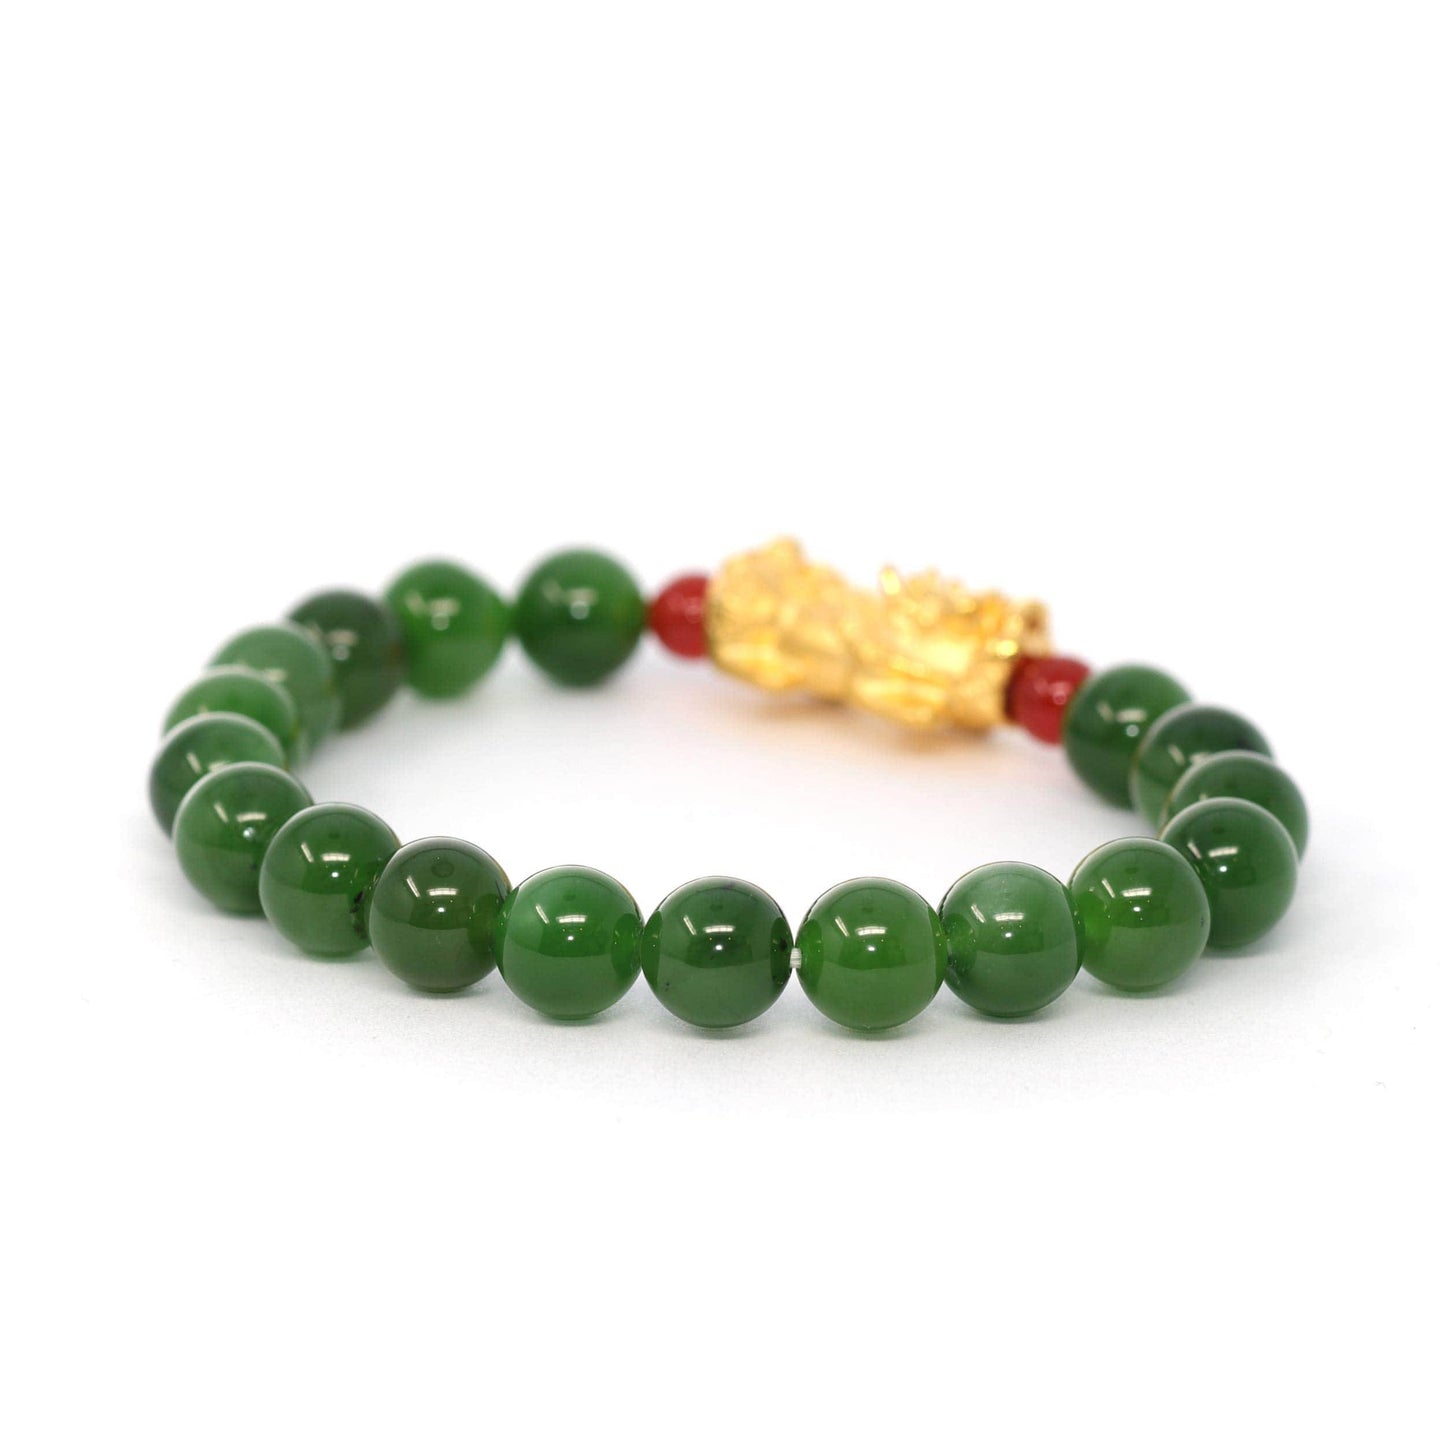 24K Pure Yellow Gold "Pixiu" With Genuine Green Jade Round Beads Bracelet Bangle ( 9.5 mm )